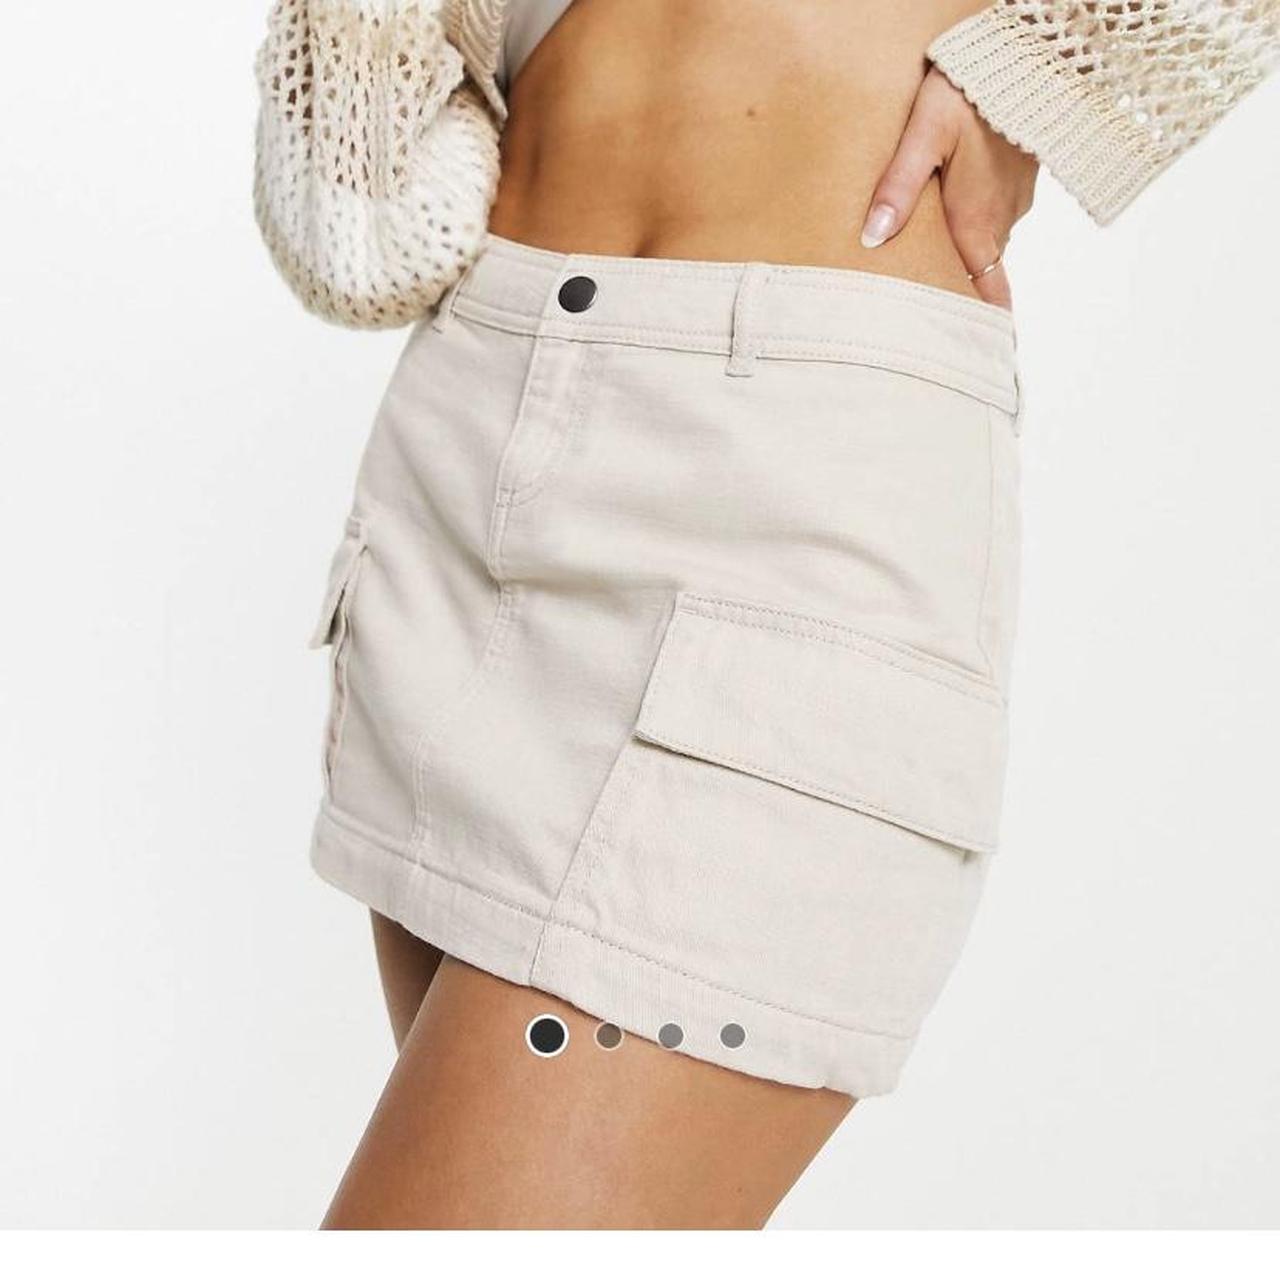 Cotton on Bobbie cargo mini skirt in stone. Brand... - Depop